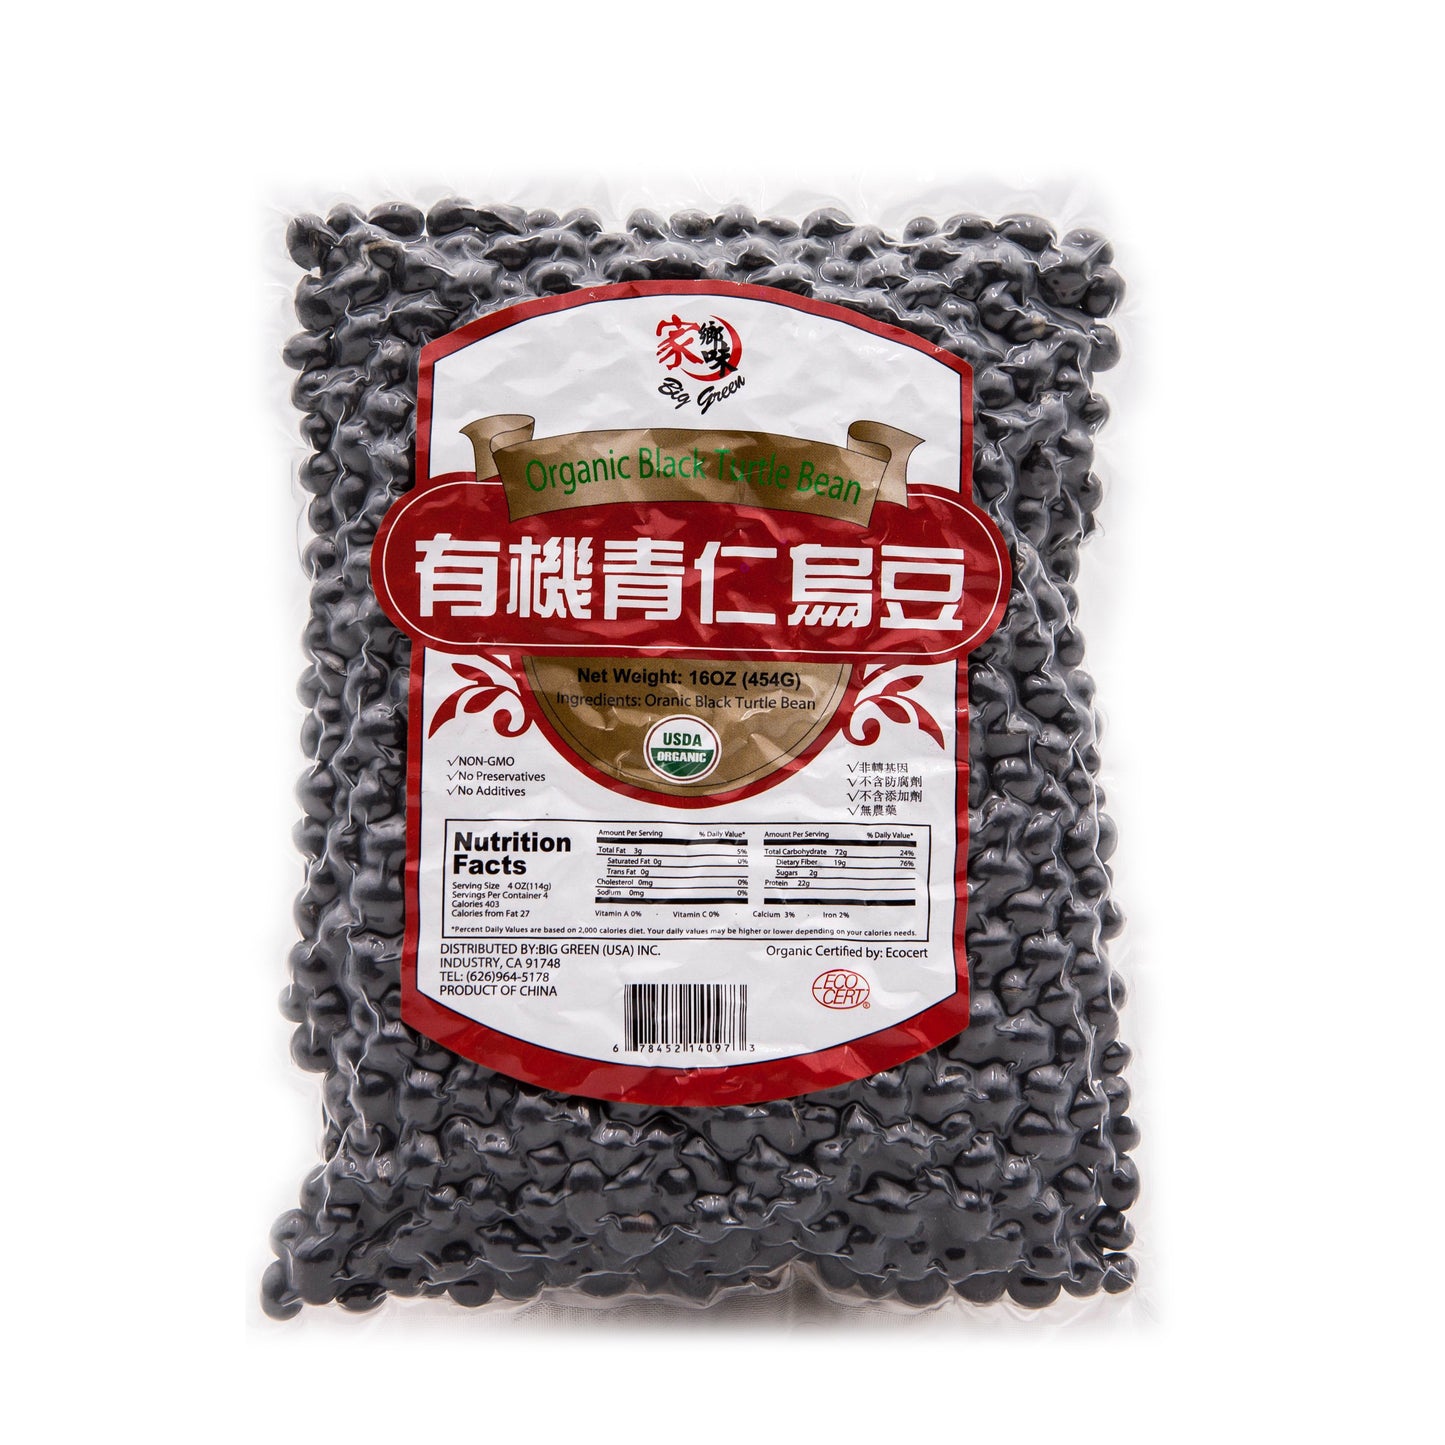 Organic Black Turtle Bean 家鄉味 有機青仁烏豆